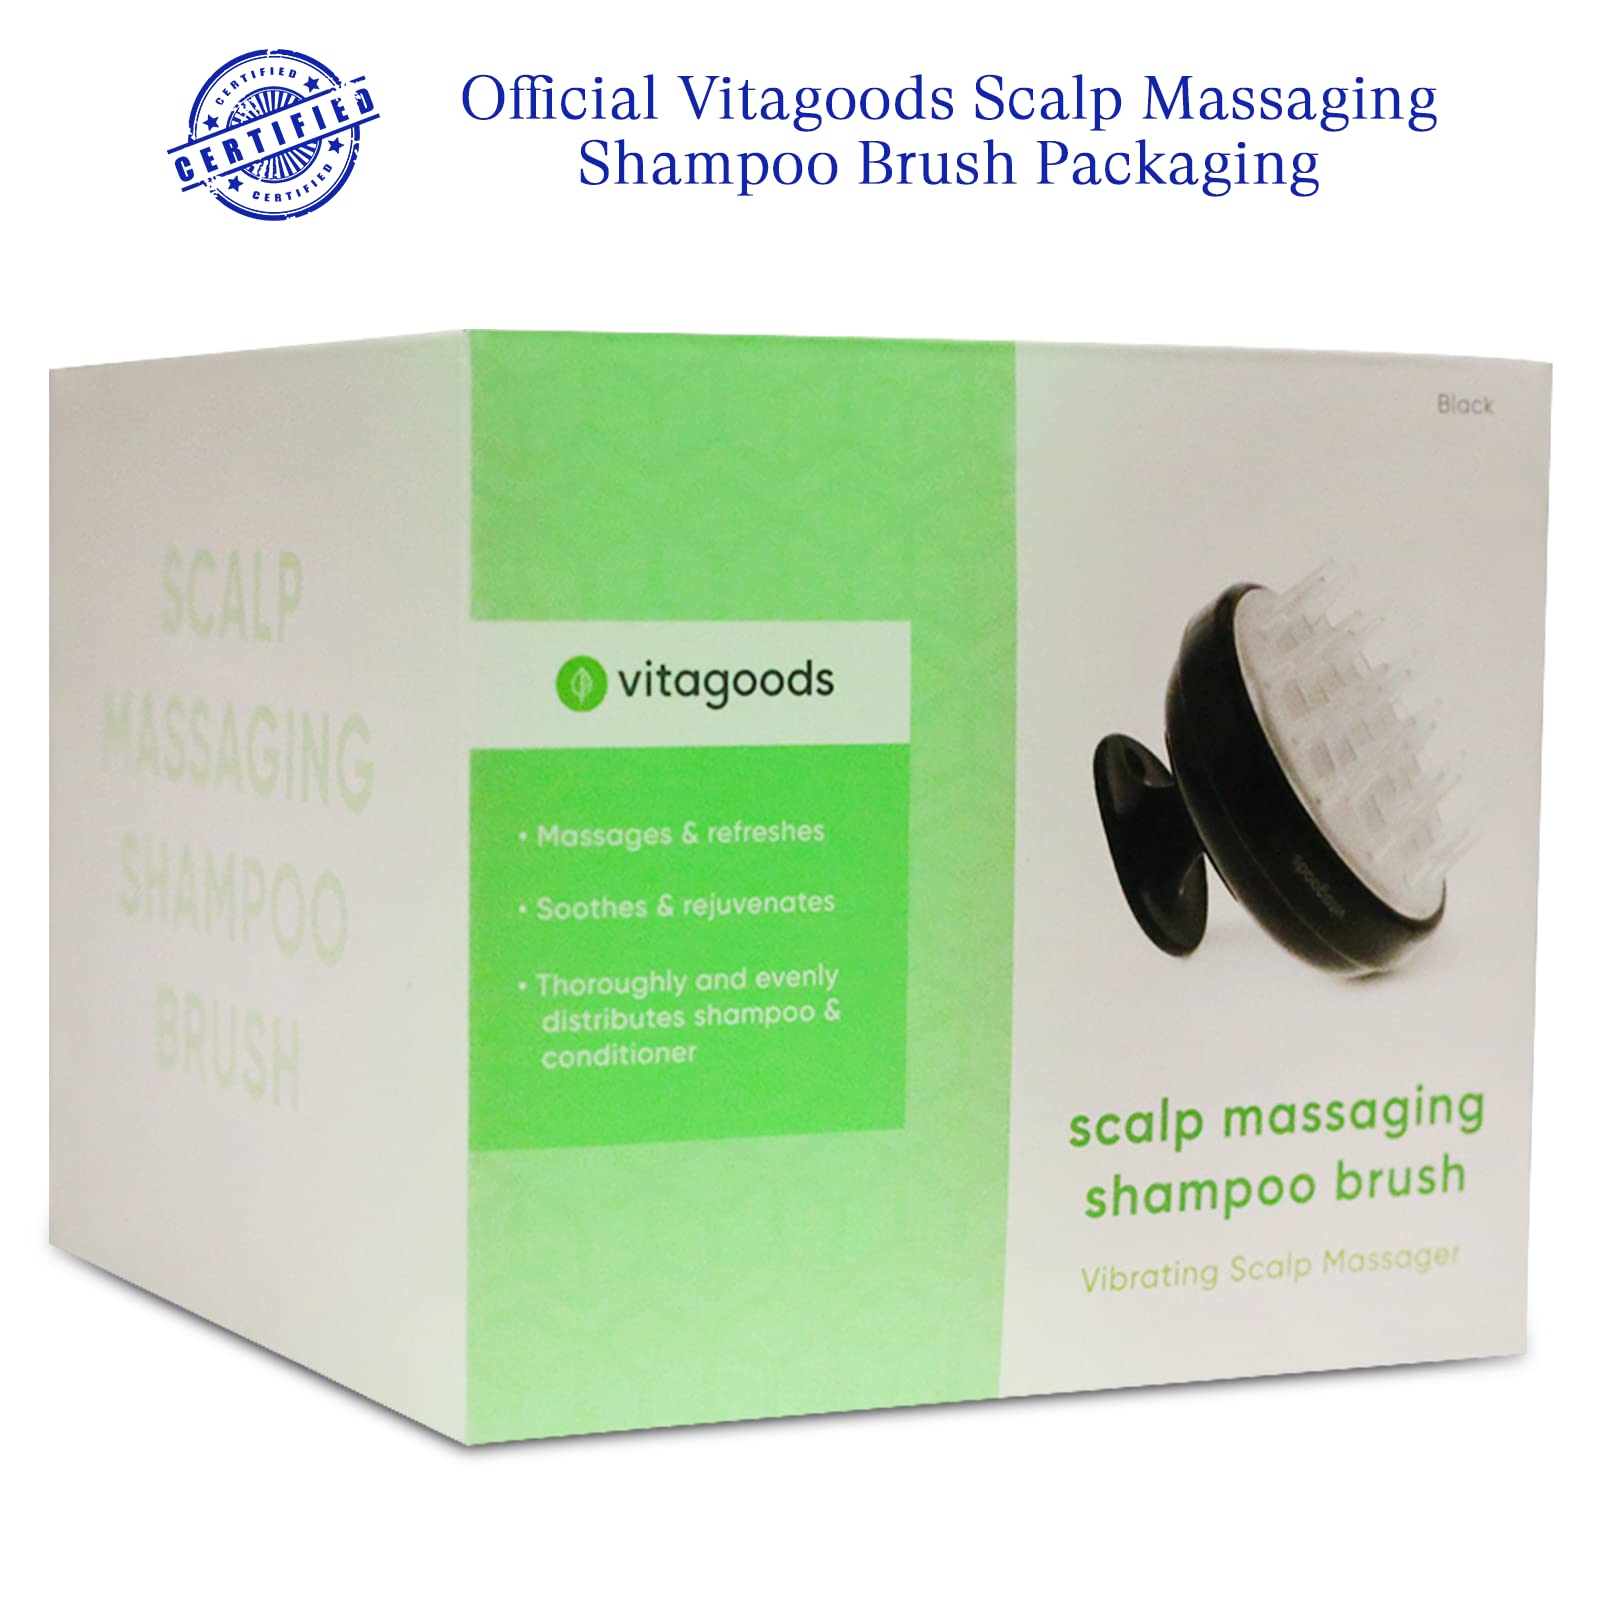 Vitagoods Scalp Massaging Shampoo Brush - Black